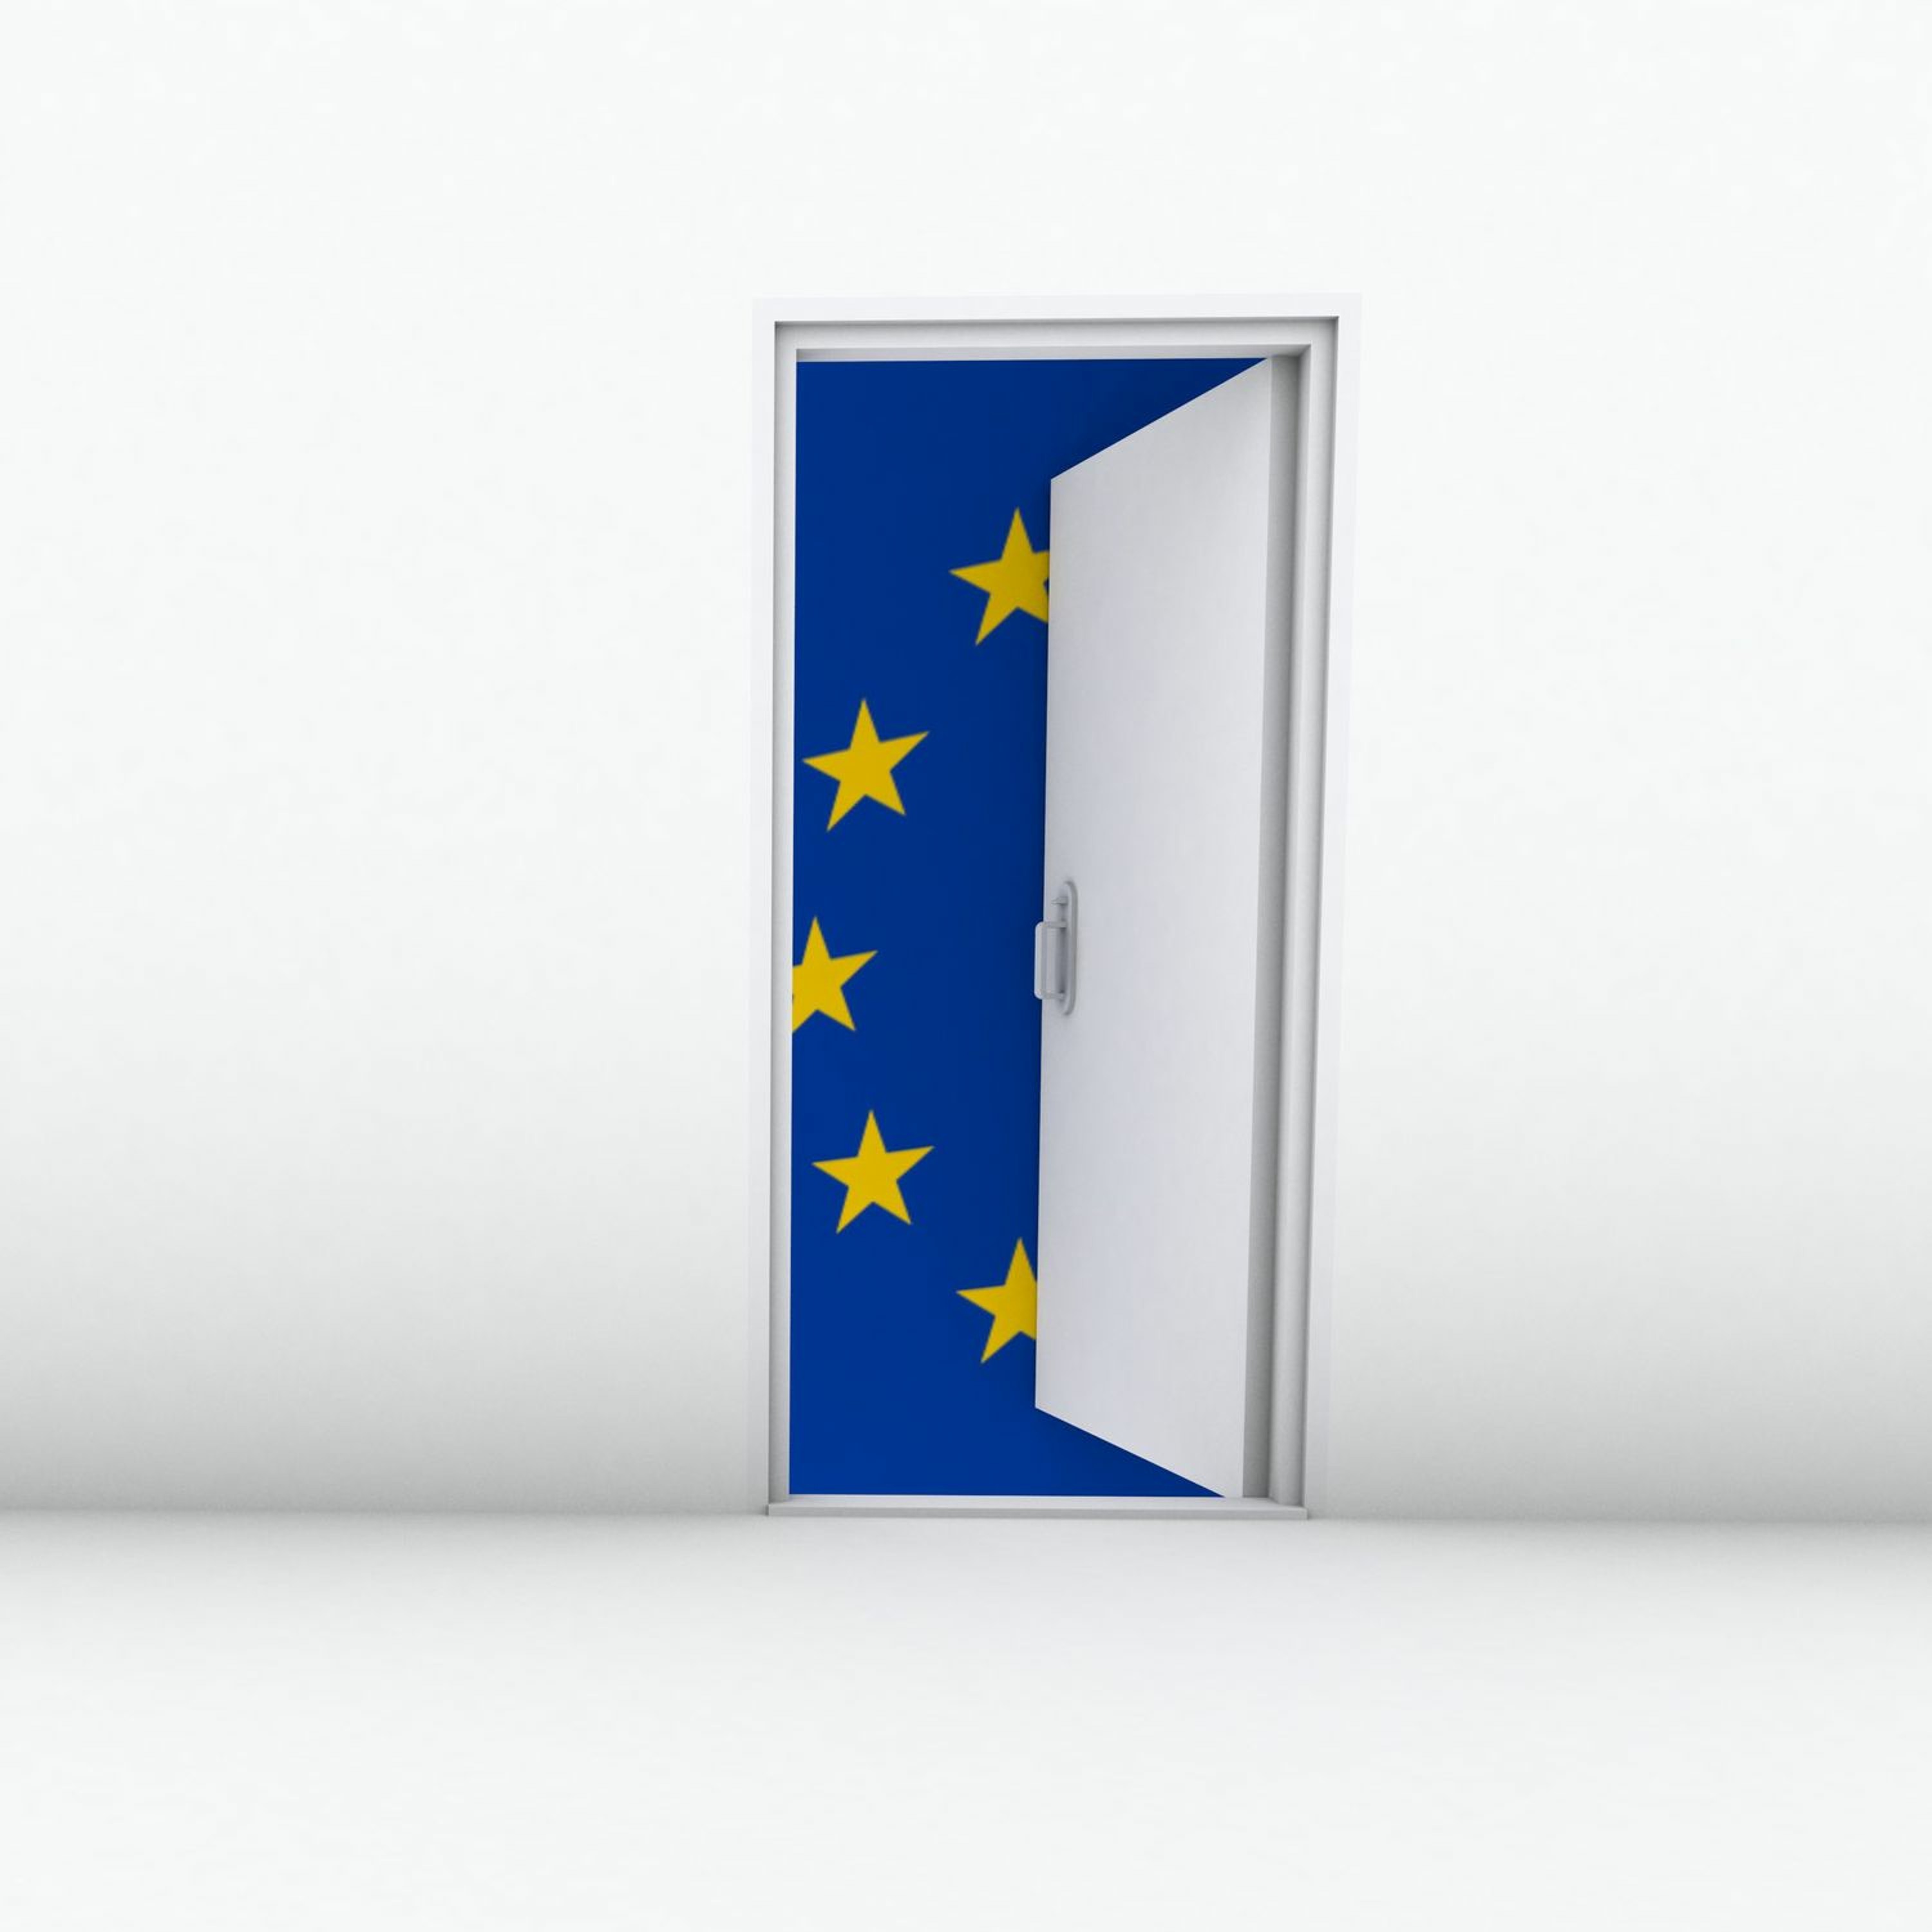 CER Podcast: Can EU enlargement happen without reform?